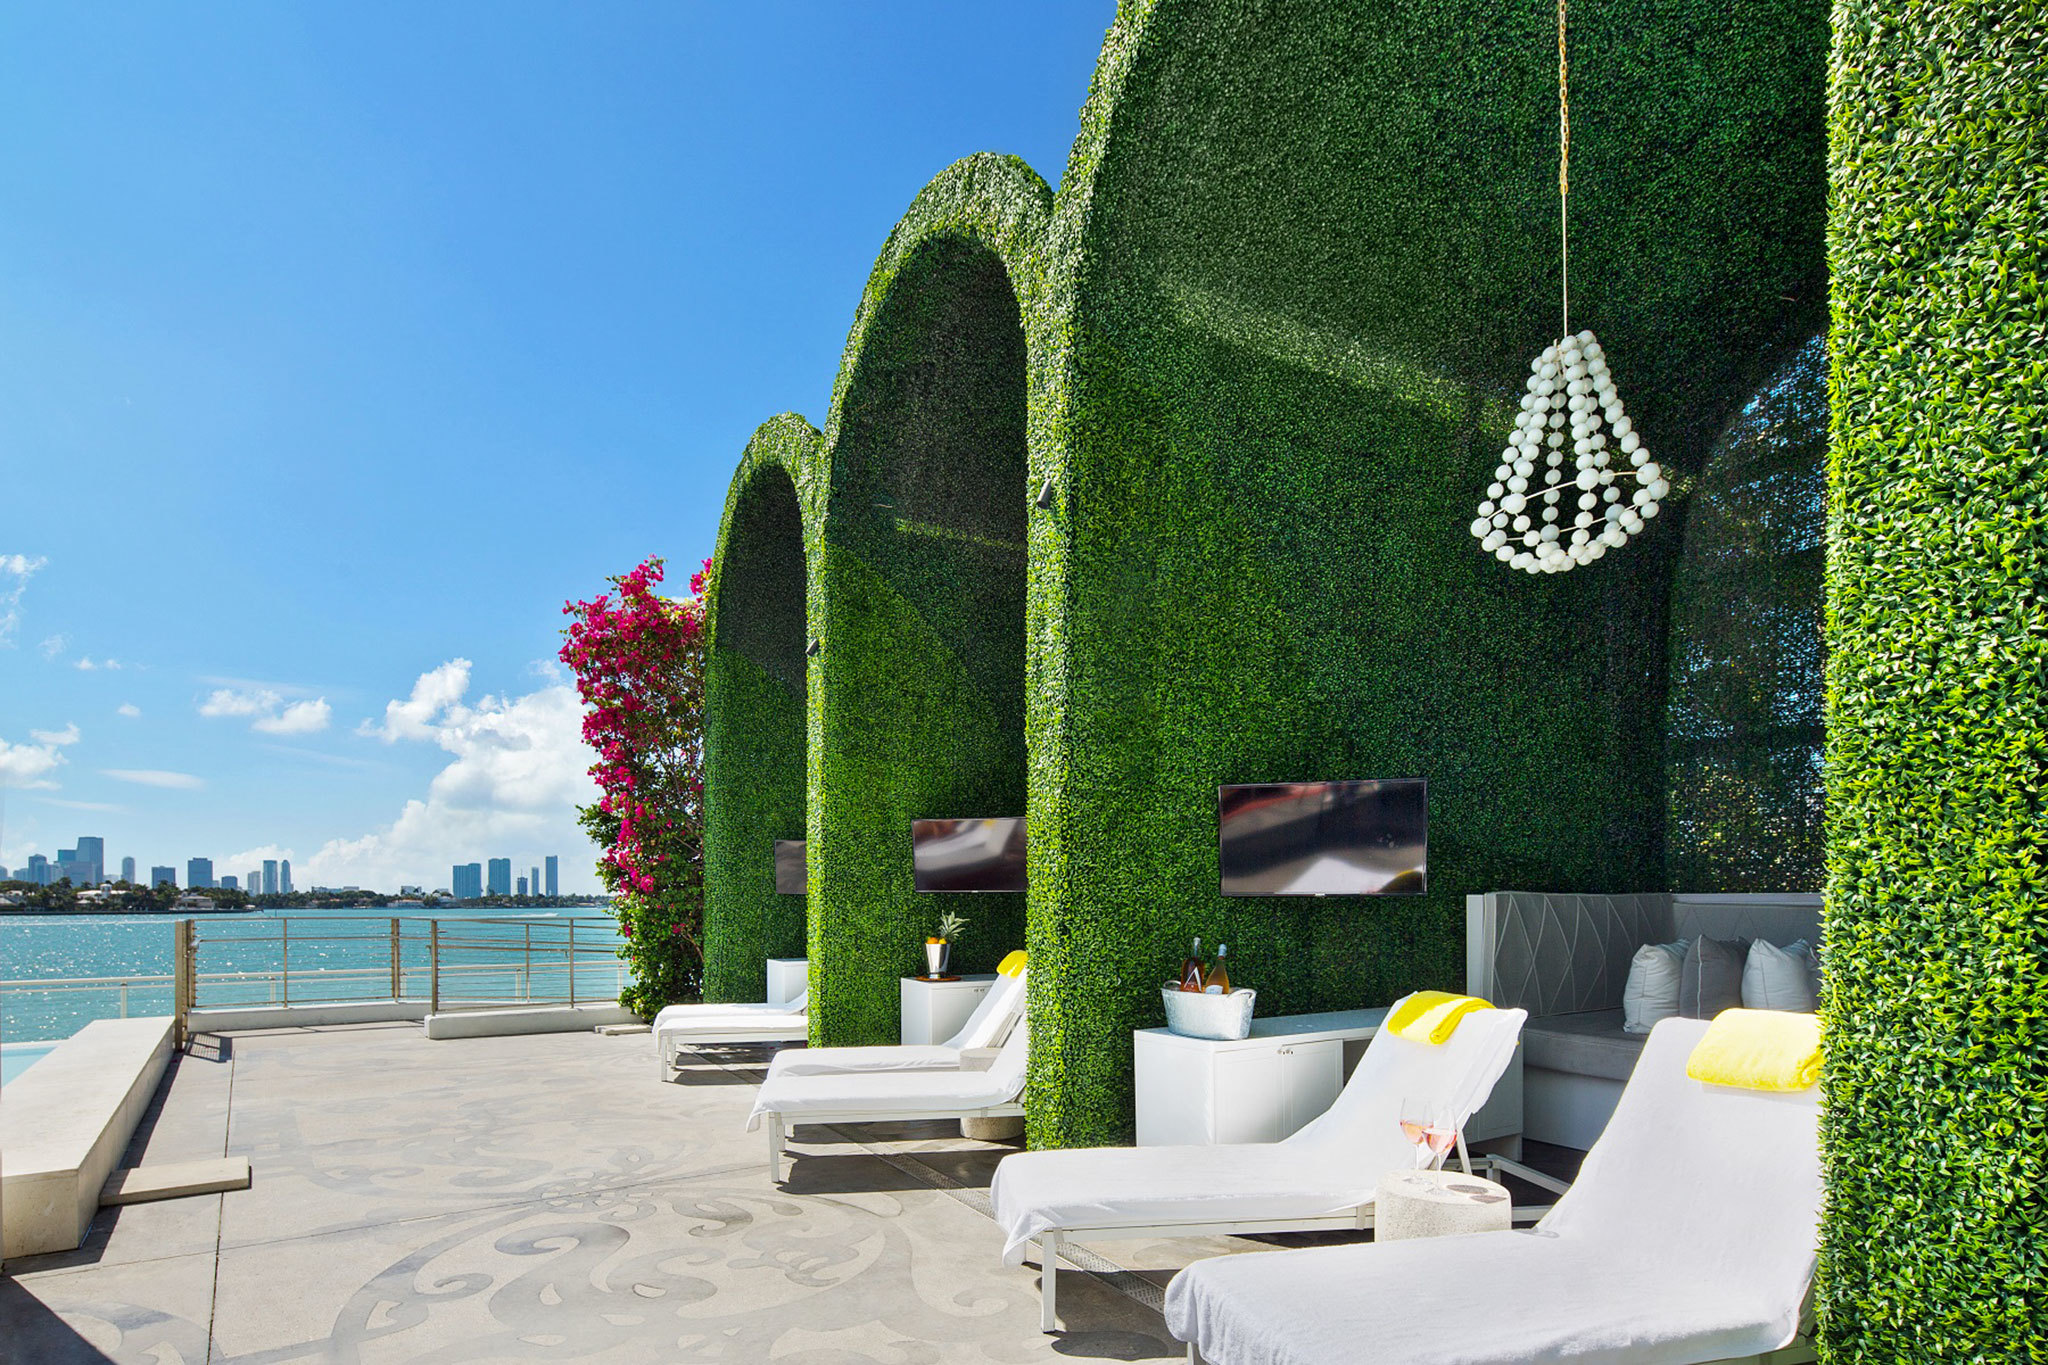 The Mondrian South Beach, Miami by Marcel Wanders